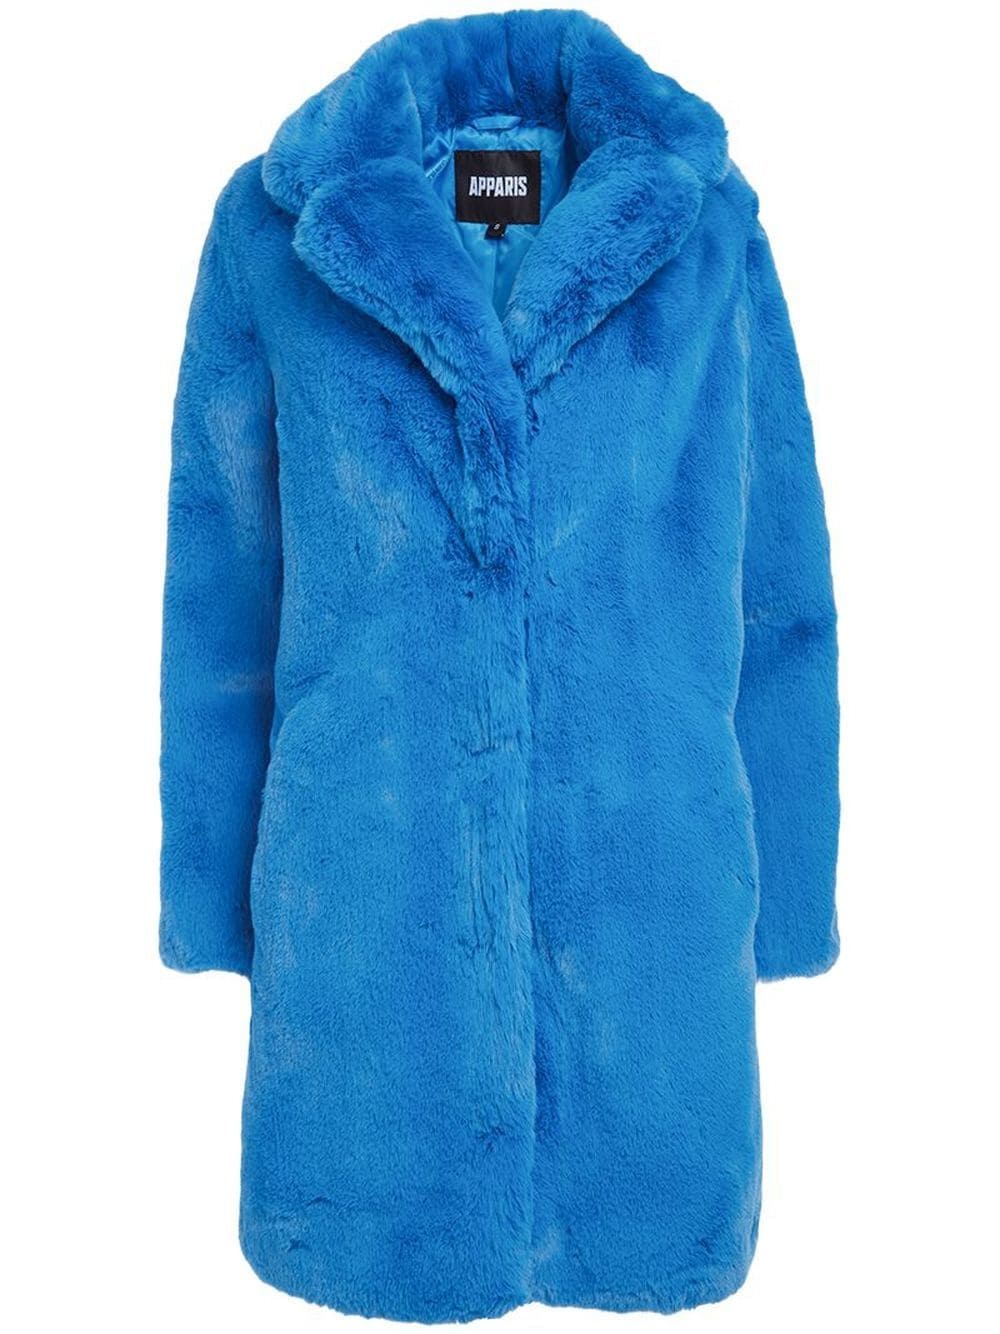 Apparis faux-fur single-breasted button coat